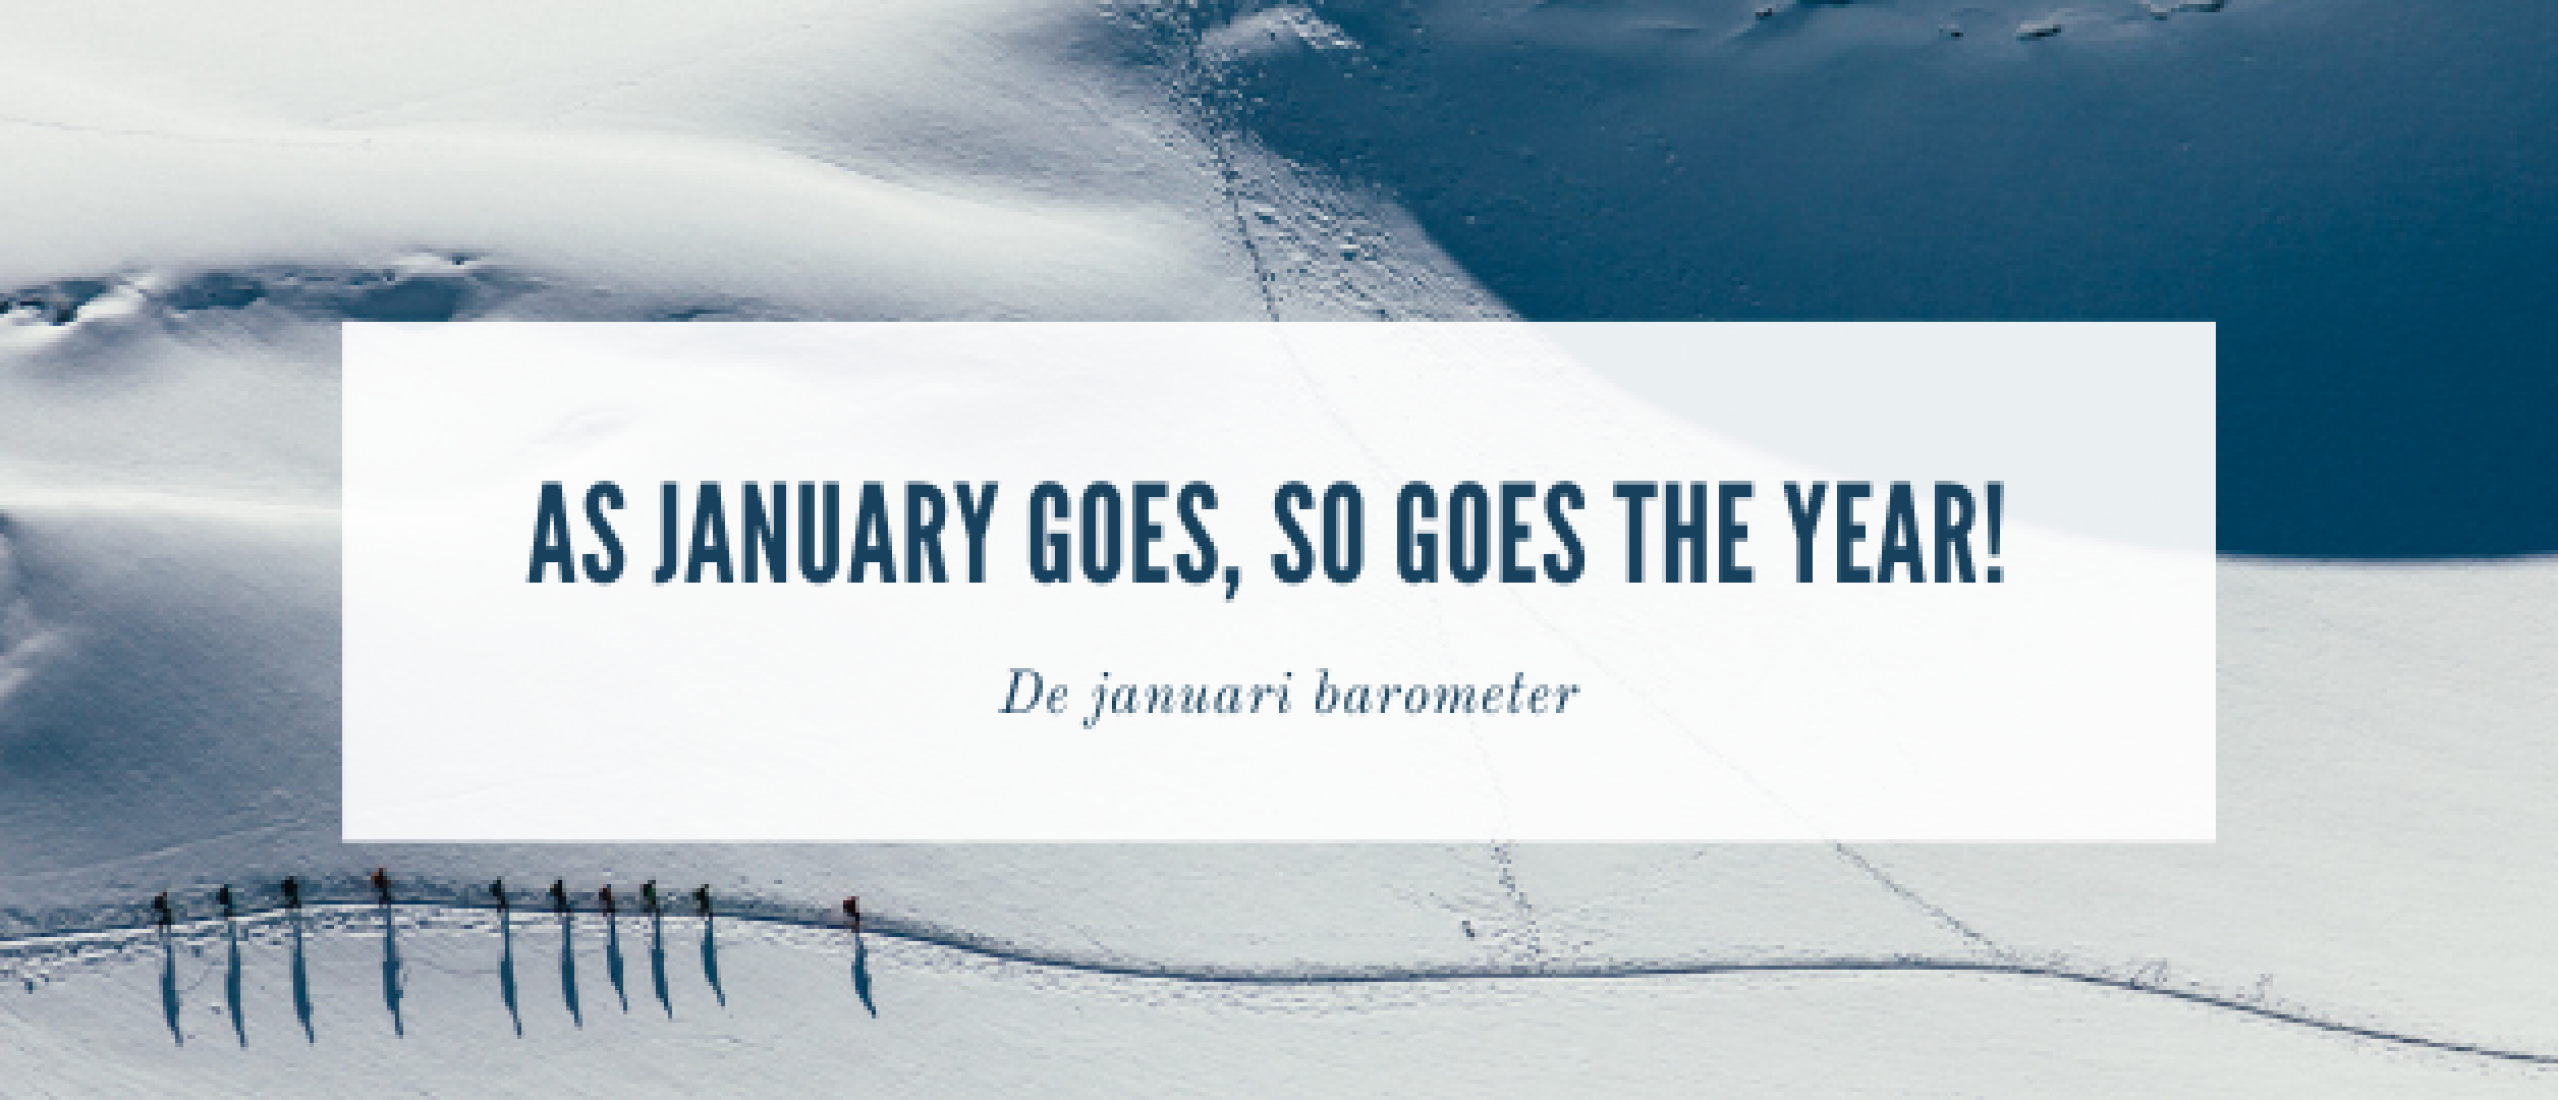 As January goes, so goes the year! De januari barometer